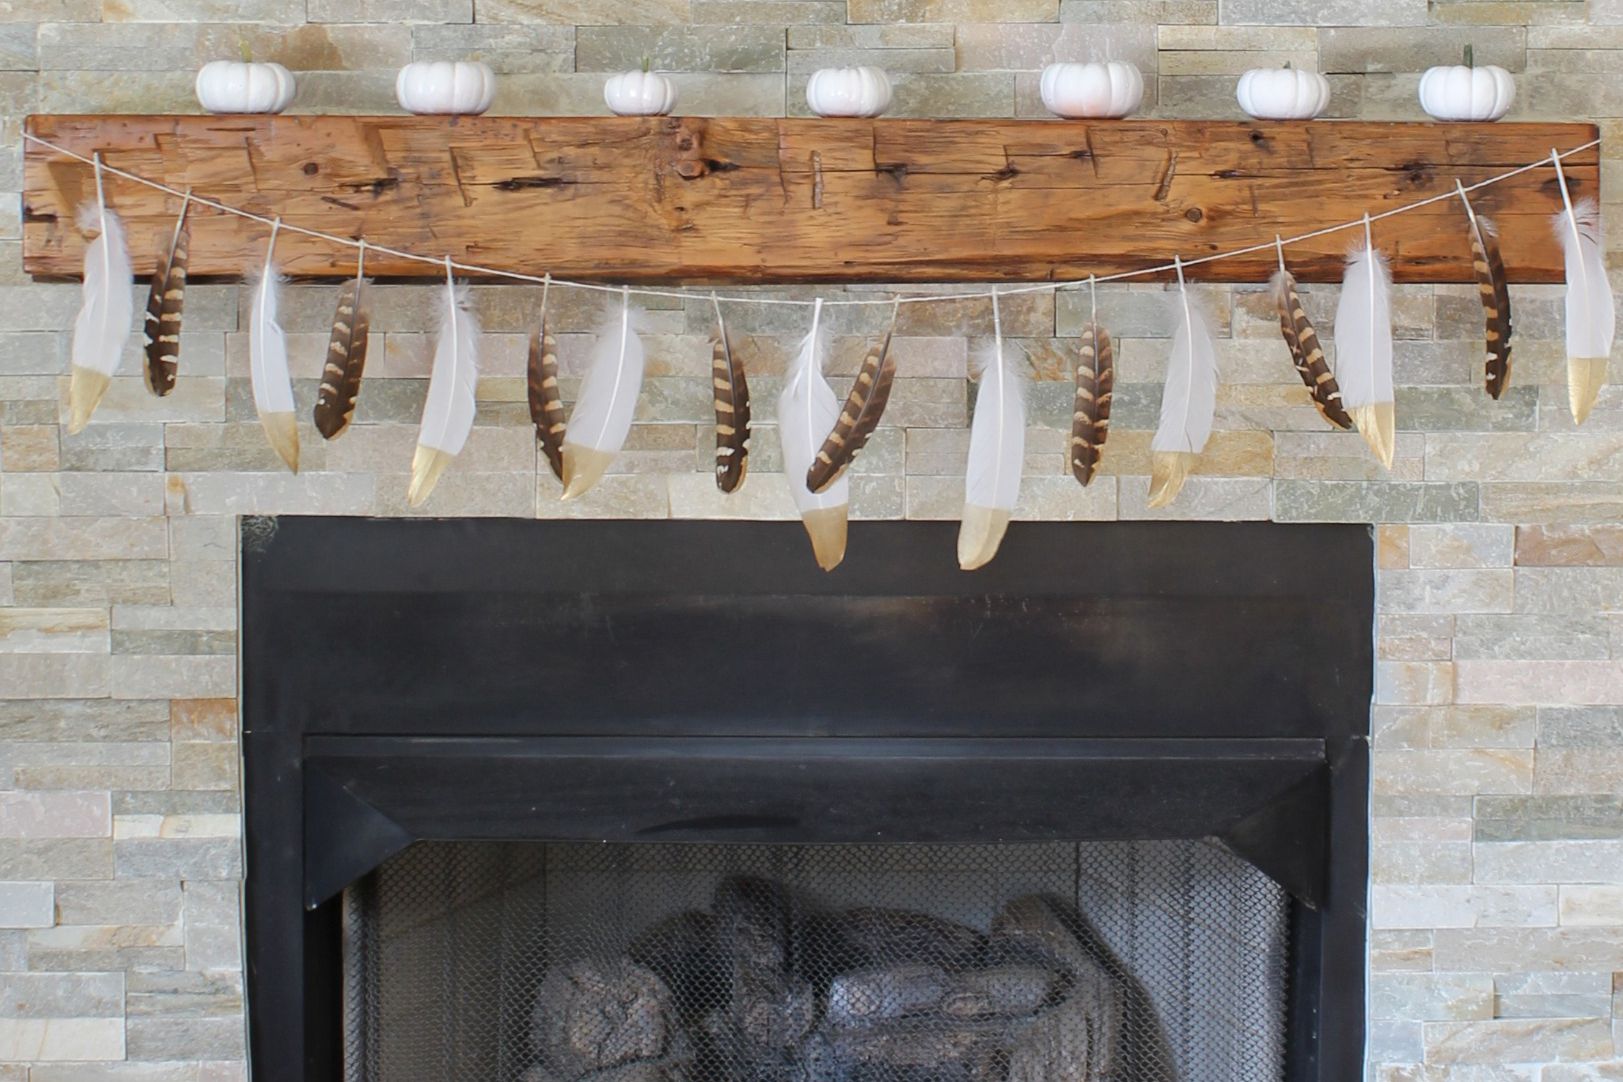 Pottery Barn Fireplace Screen Lovely 35 Beautiful Fall Mantel Decorating Ideas